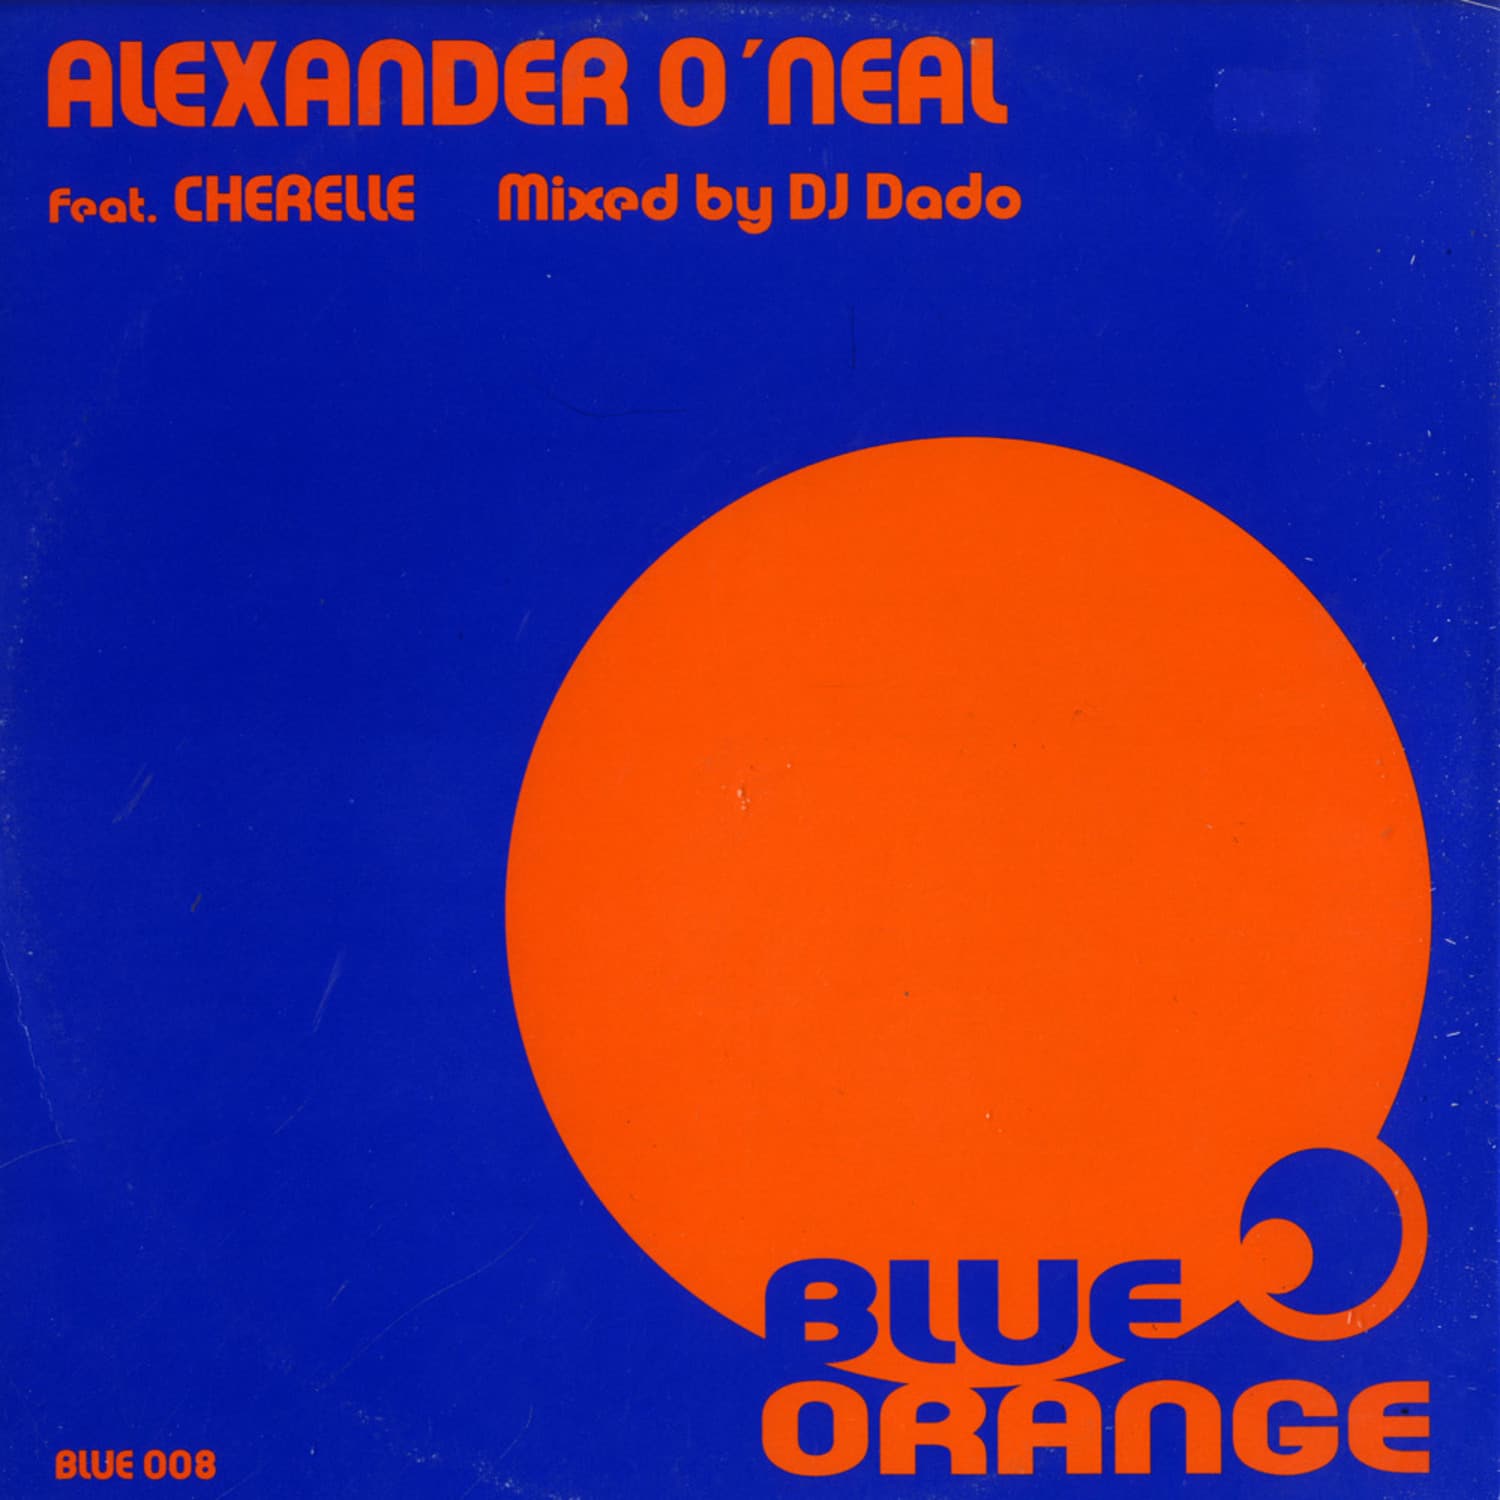 Alexander o neal feat. cherelle dj dado rmx - blue 008